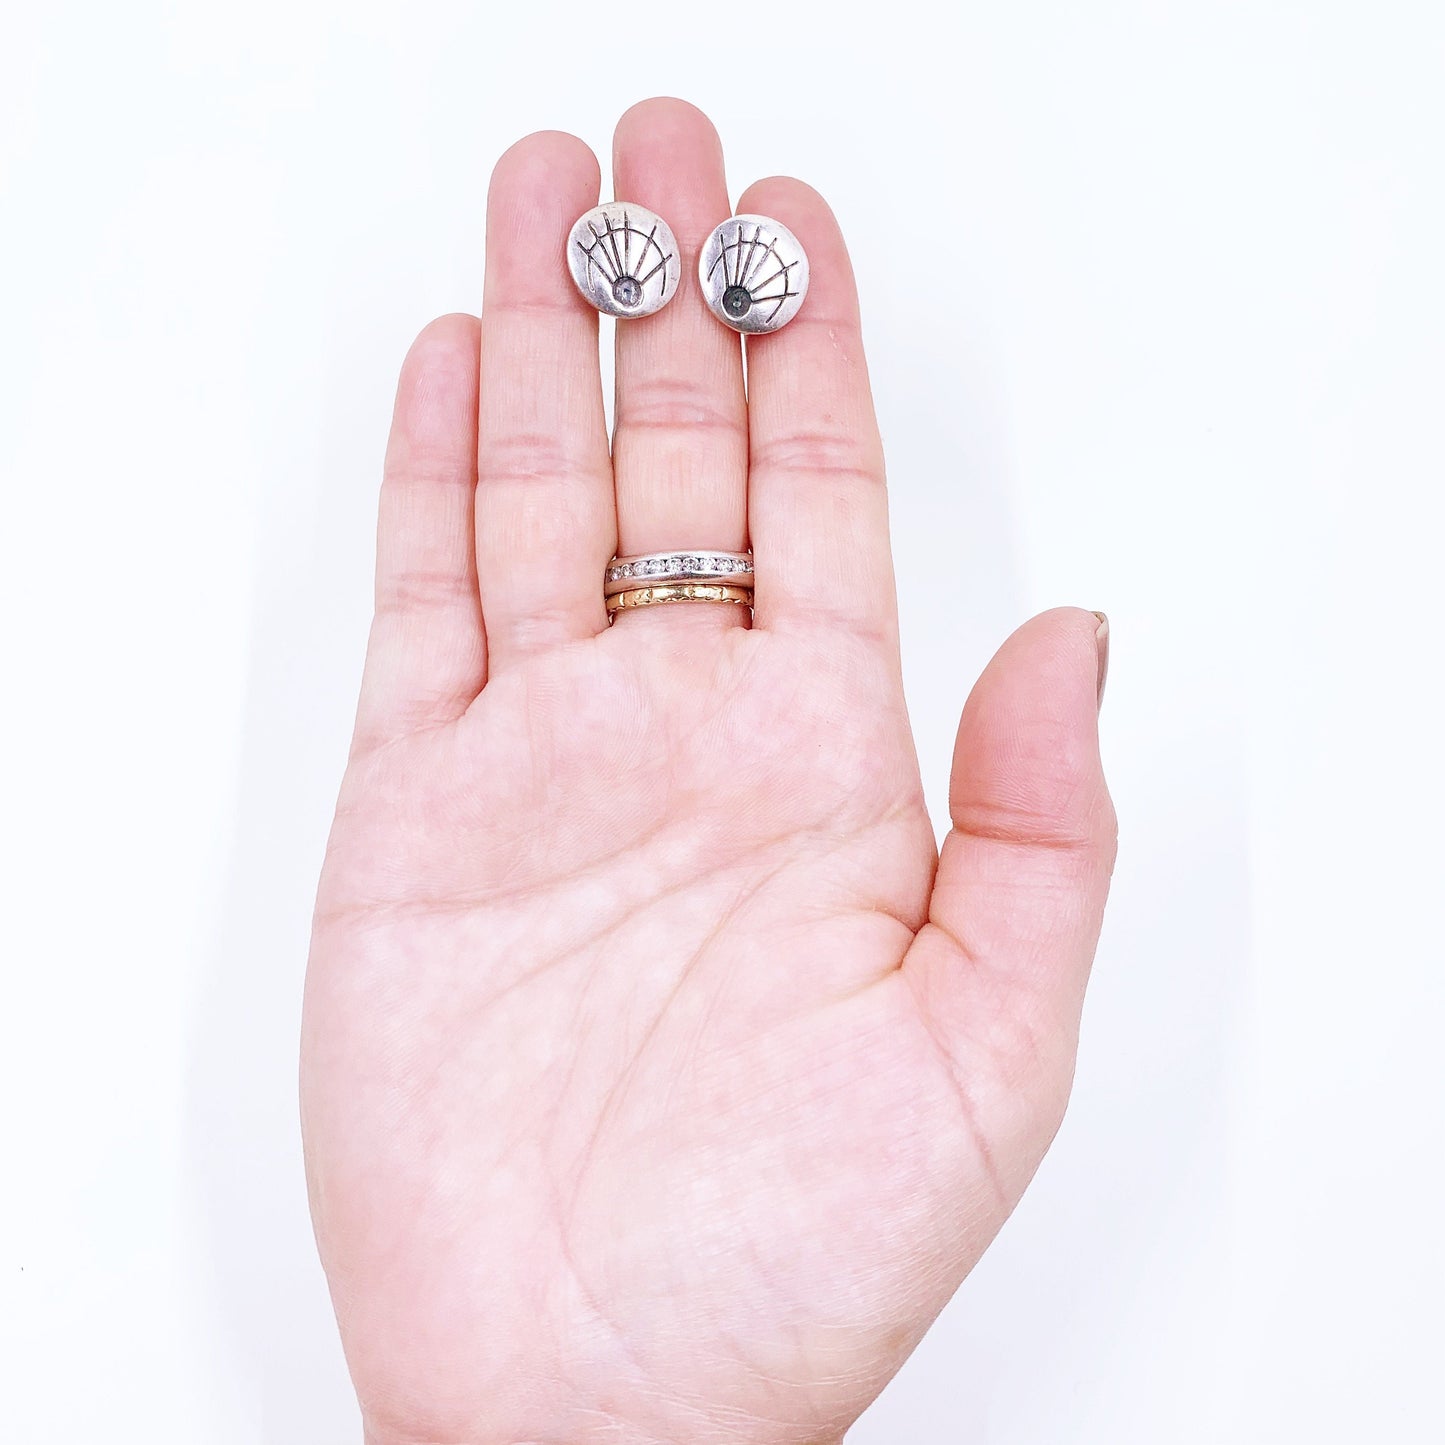 Vintage Modernist Silver Earrings | Geometric Abstract Line Earrings